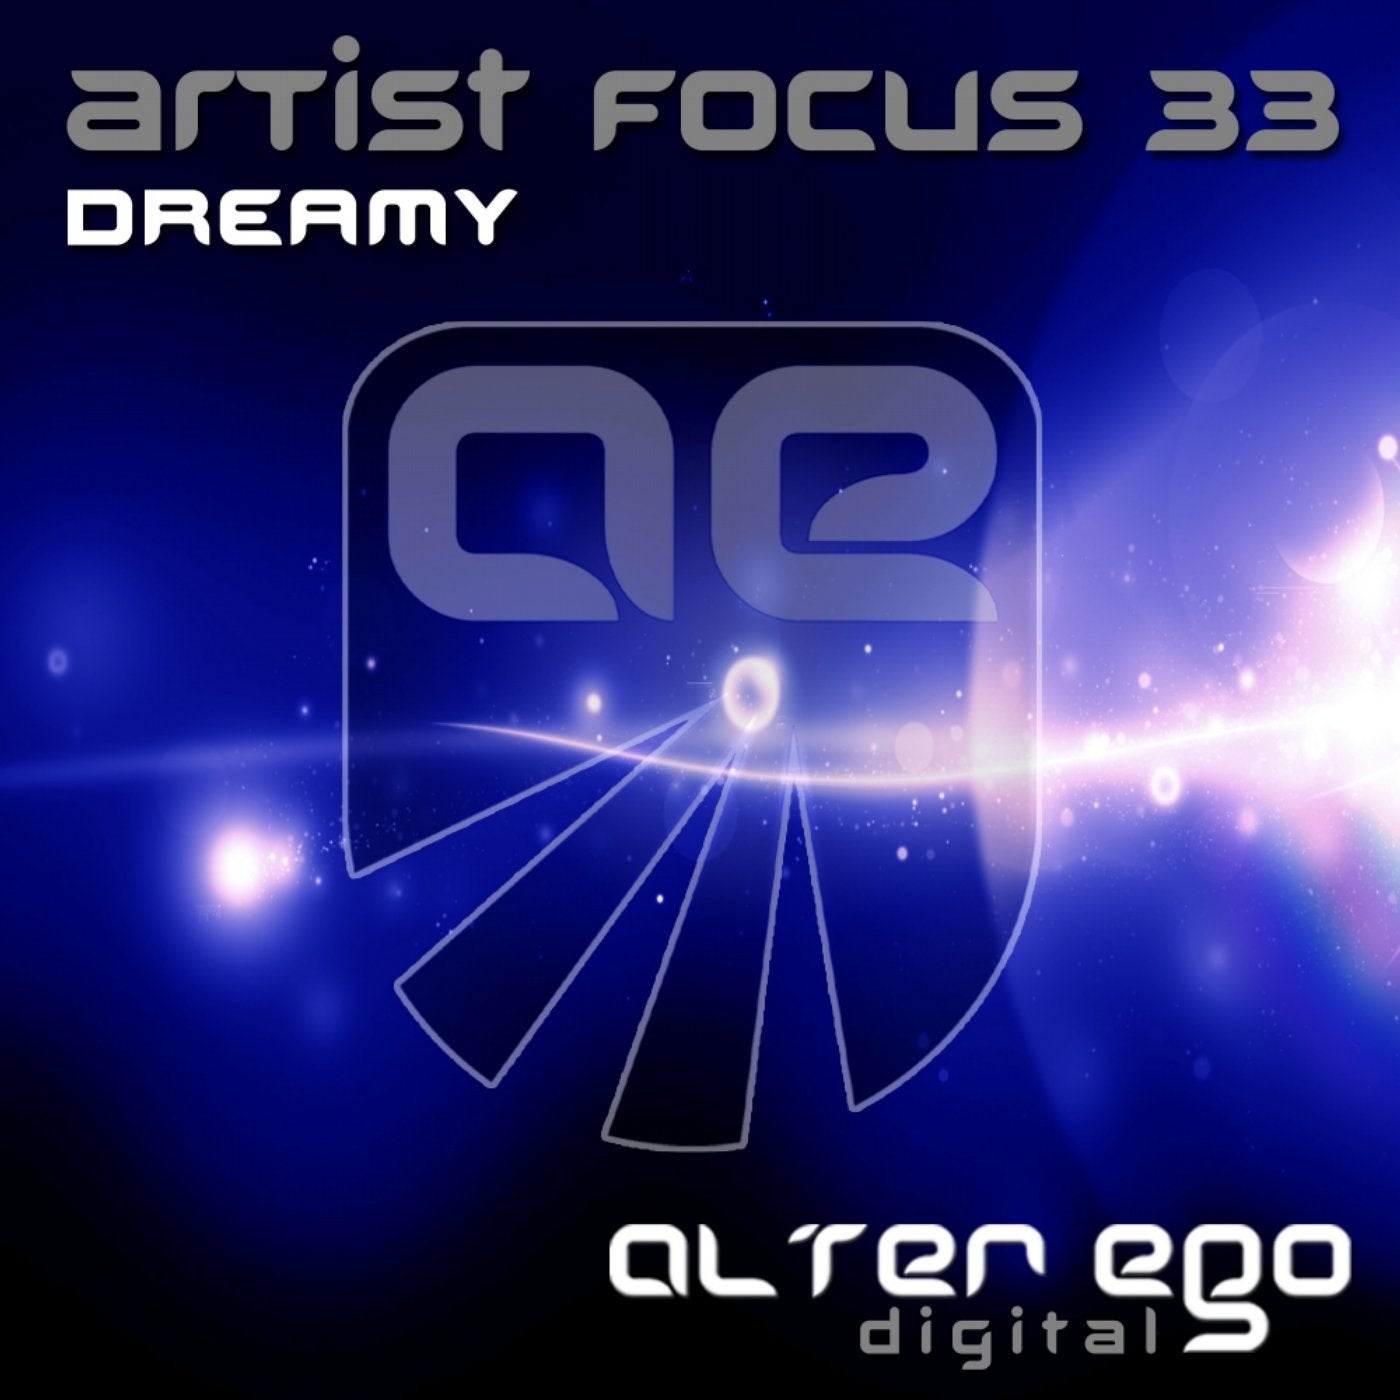 Artist Focus 33